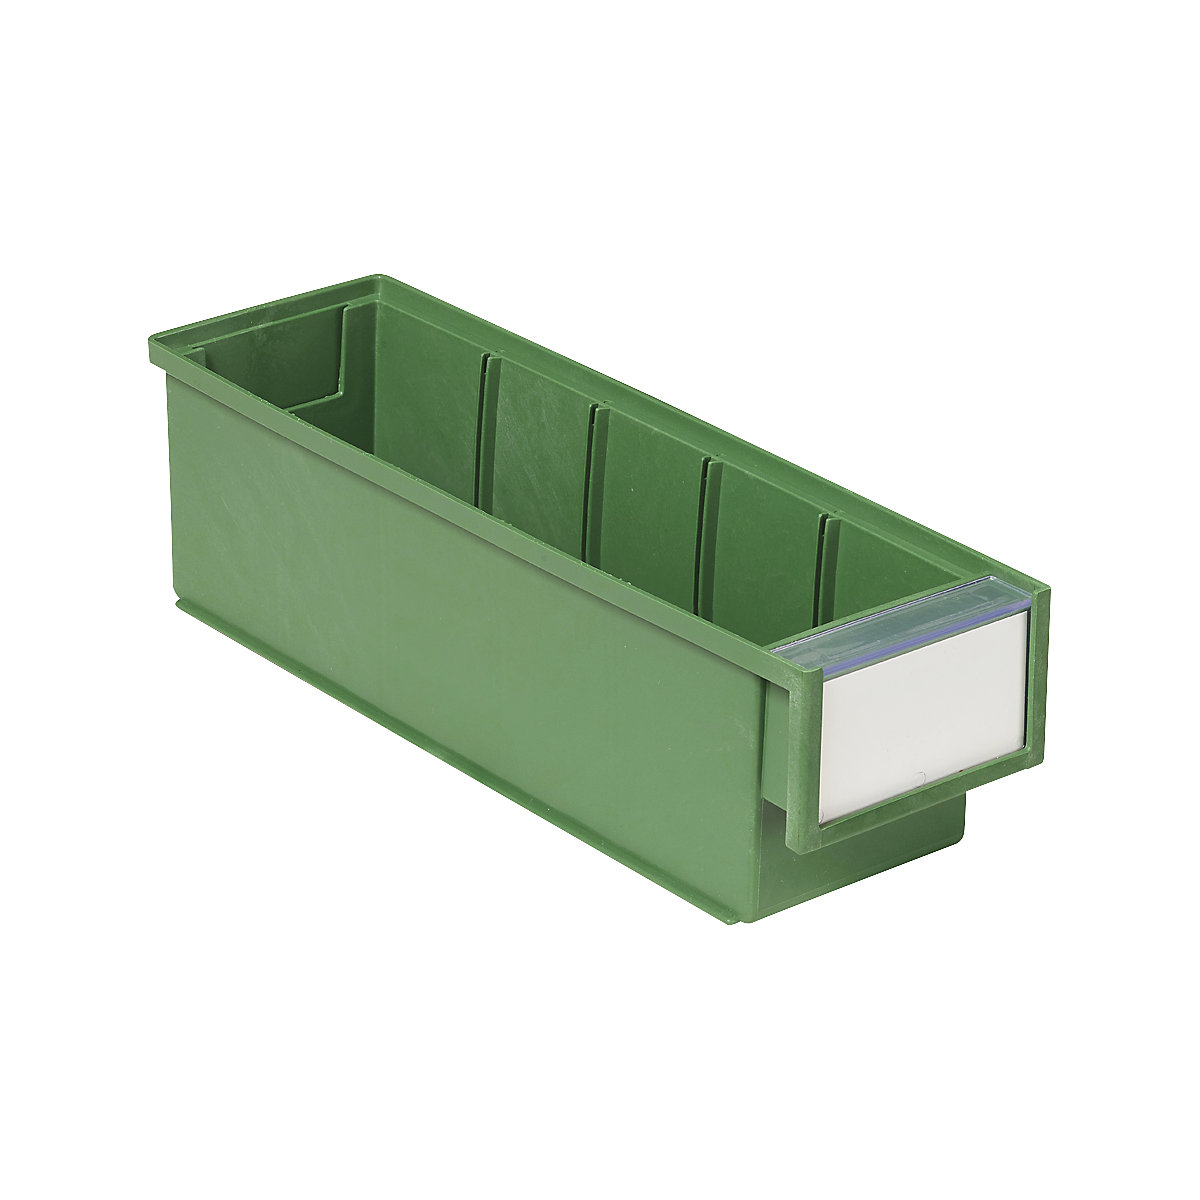 BiOX állványdoboz – Treston, zöld, h x szé x ma 300 x 90 x 82 mm, cs. e. 30 db-4